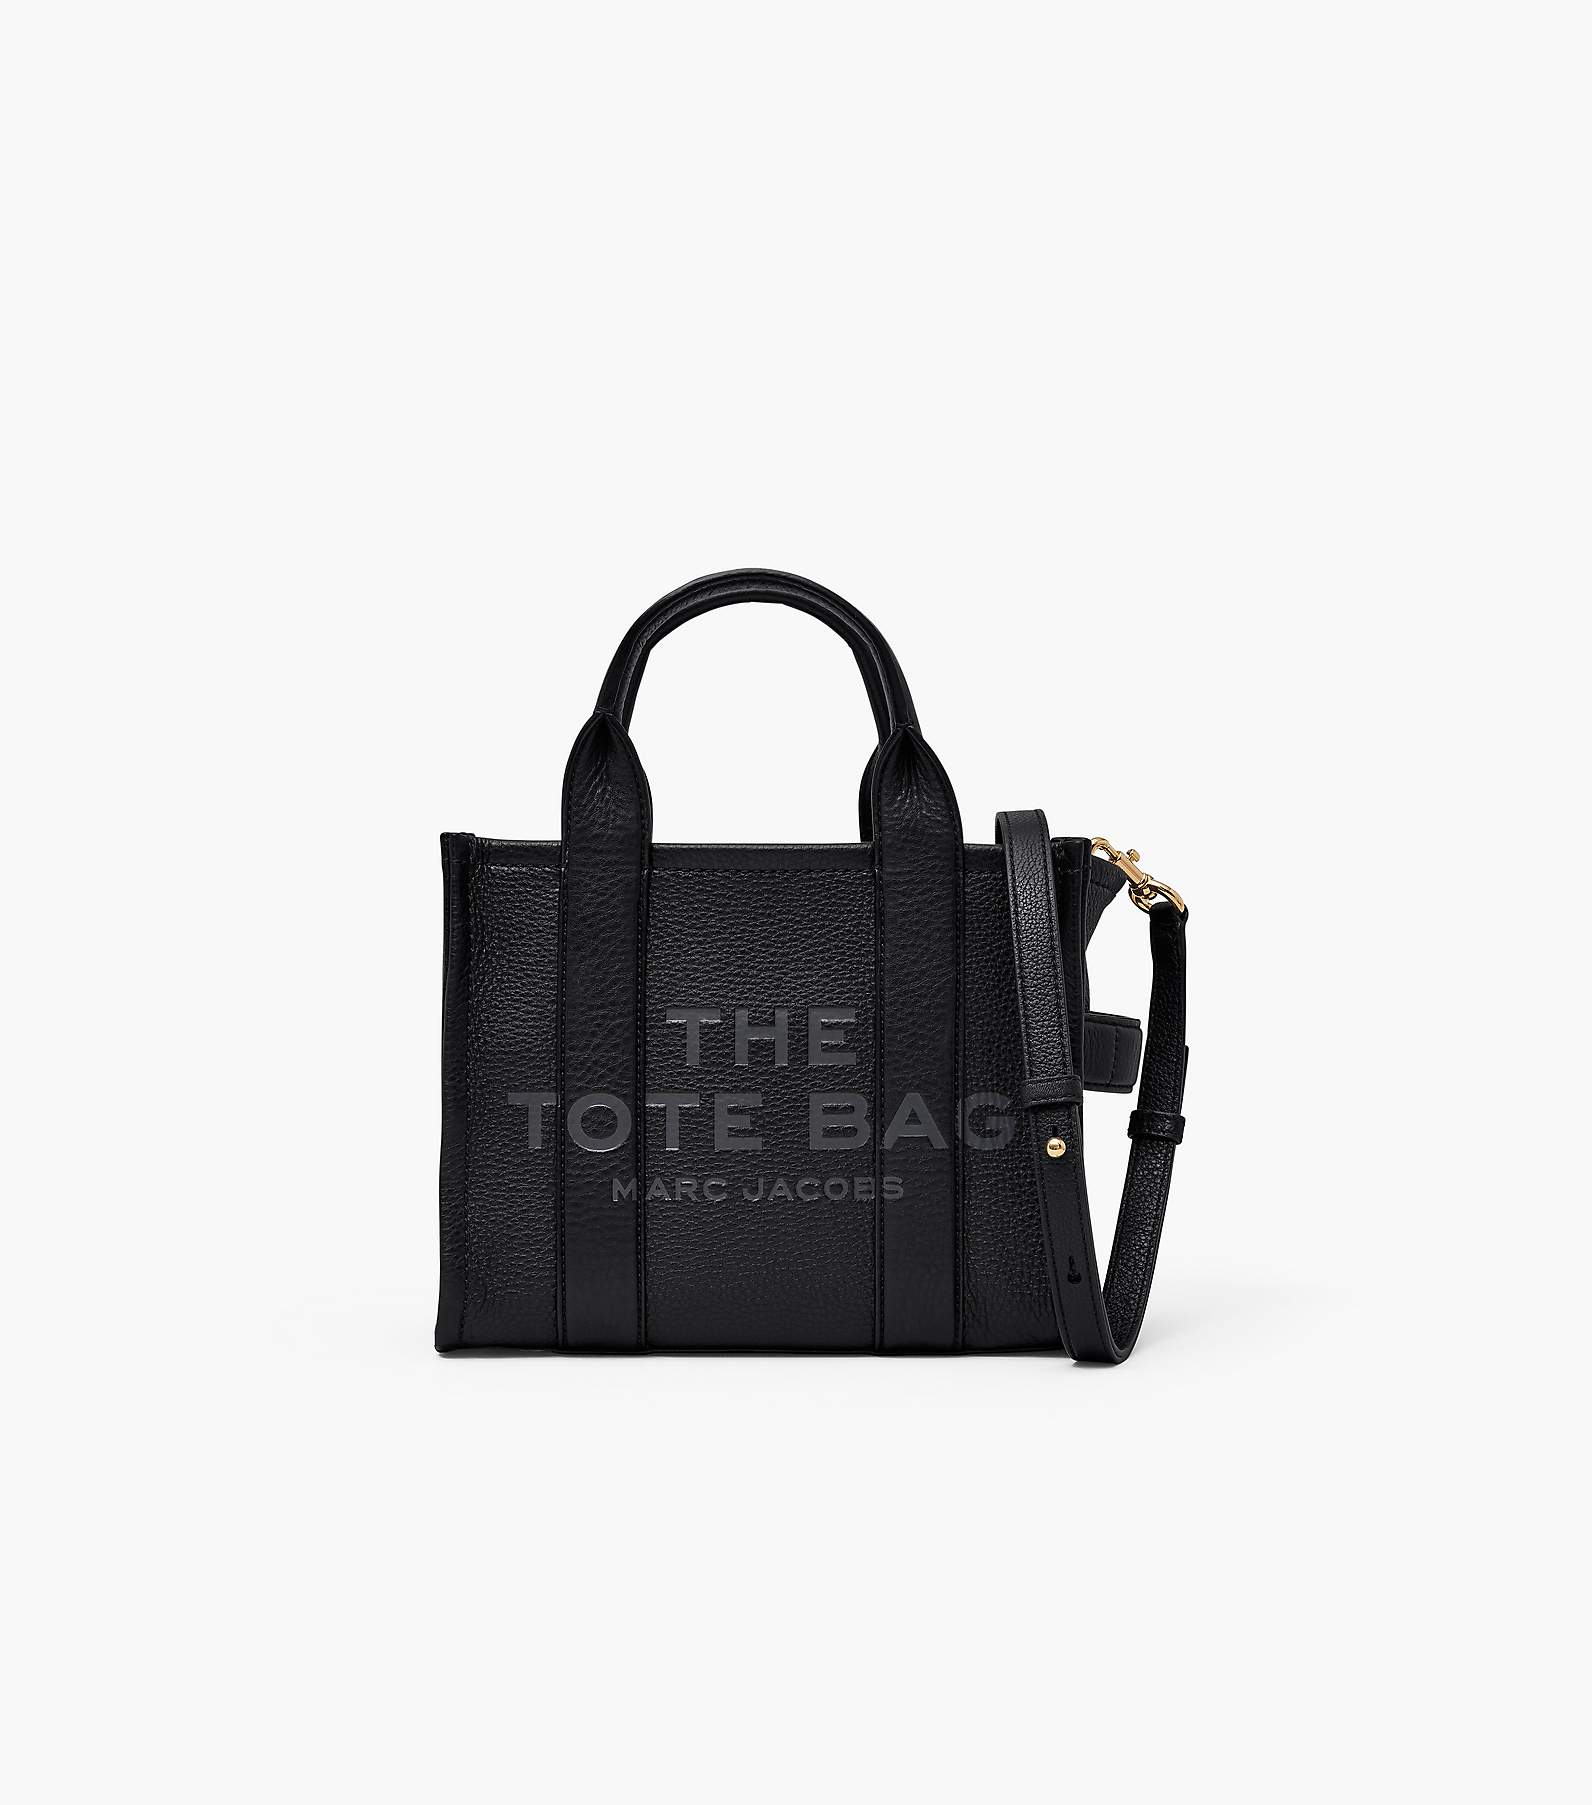 Louis Vuitton LV dust bag jewelly wallet bag watch handbag - 29JAN